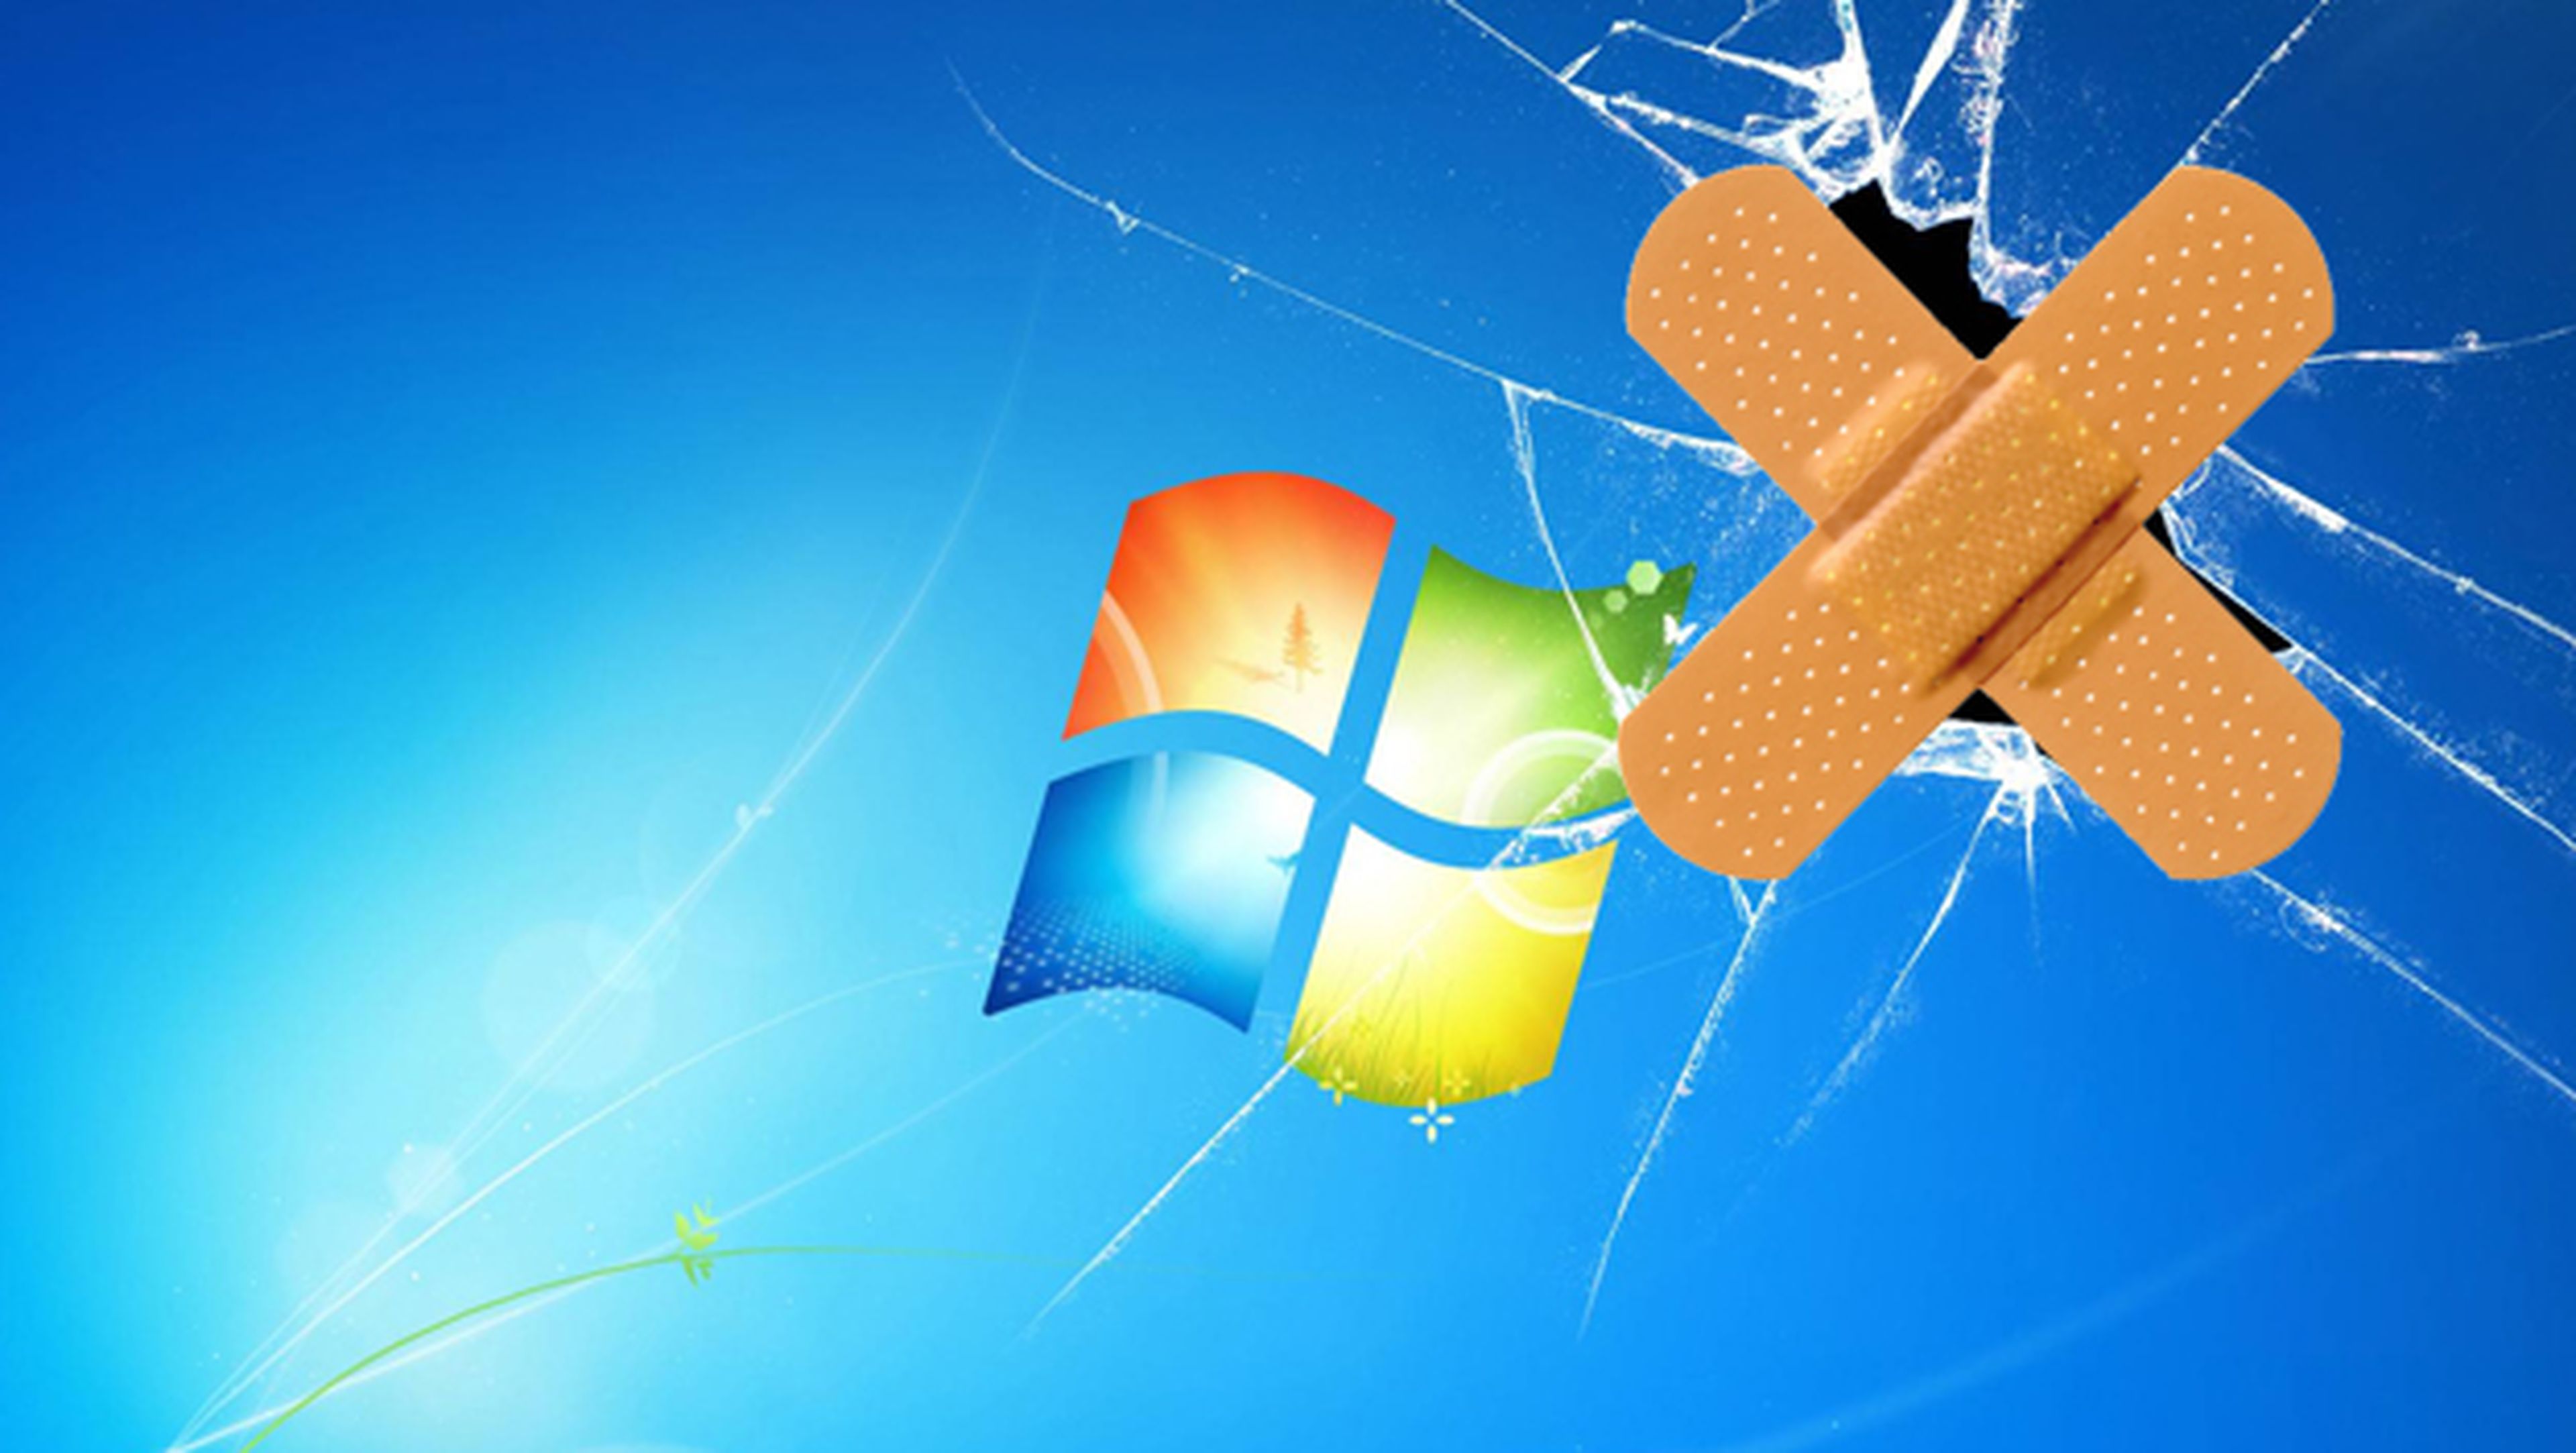 Windows 10 build 10061 tecnical preview